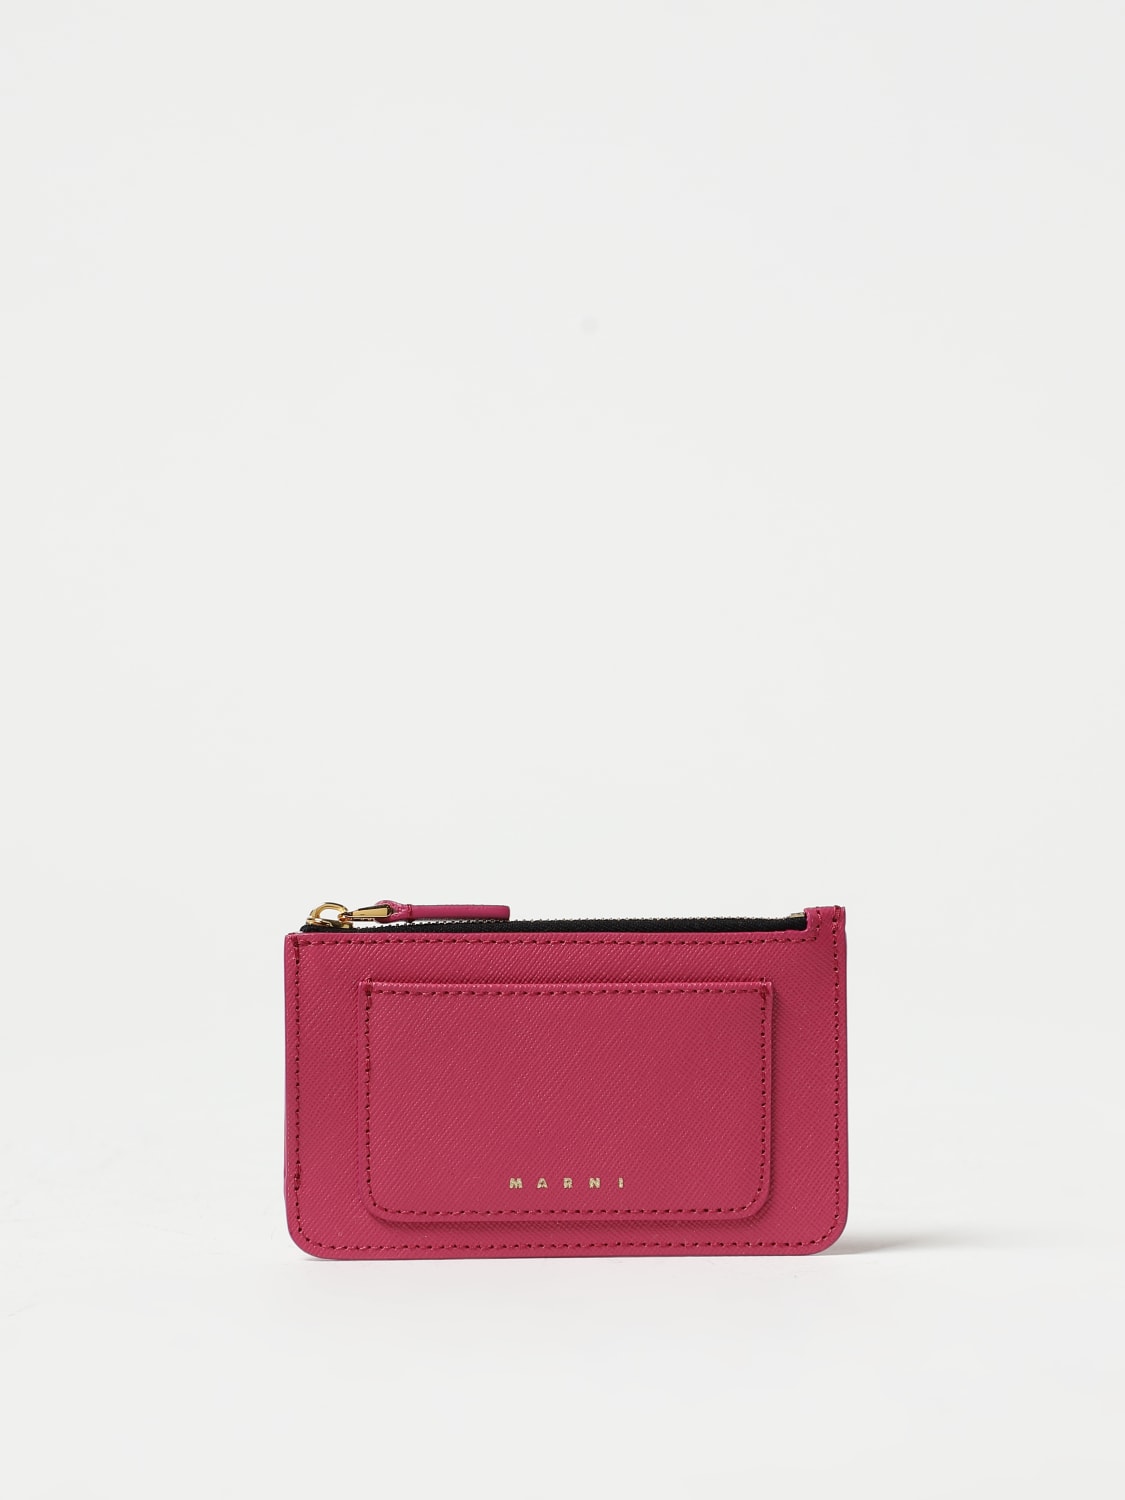 Marni credit card holder in saffiano leather